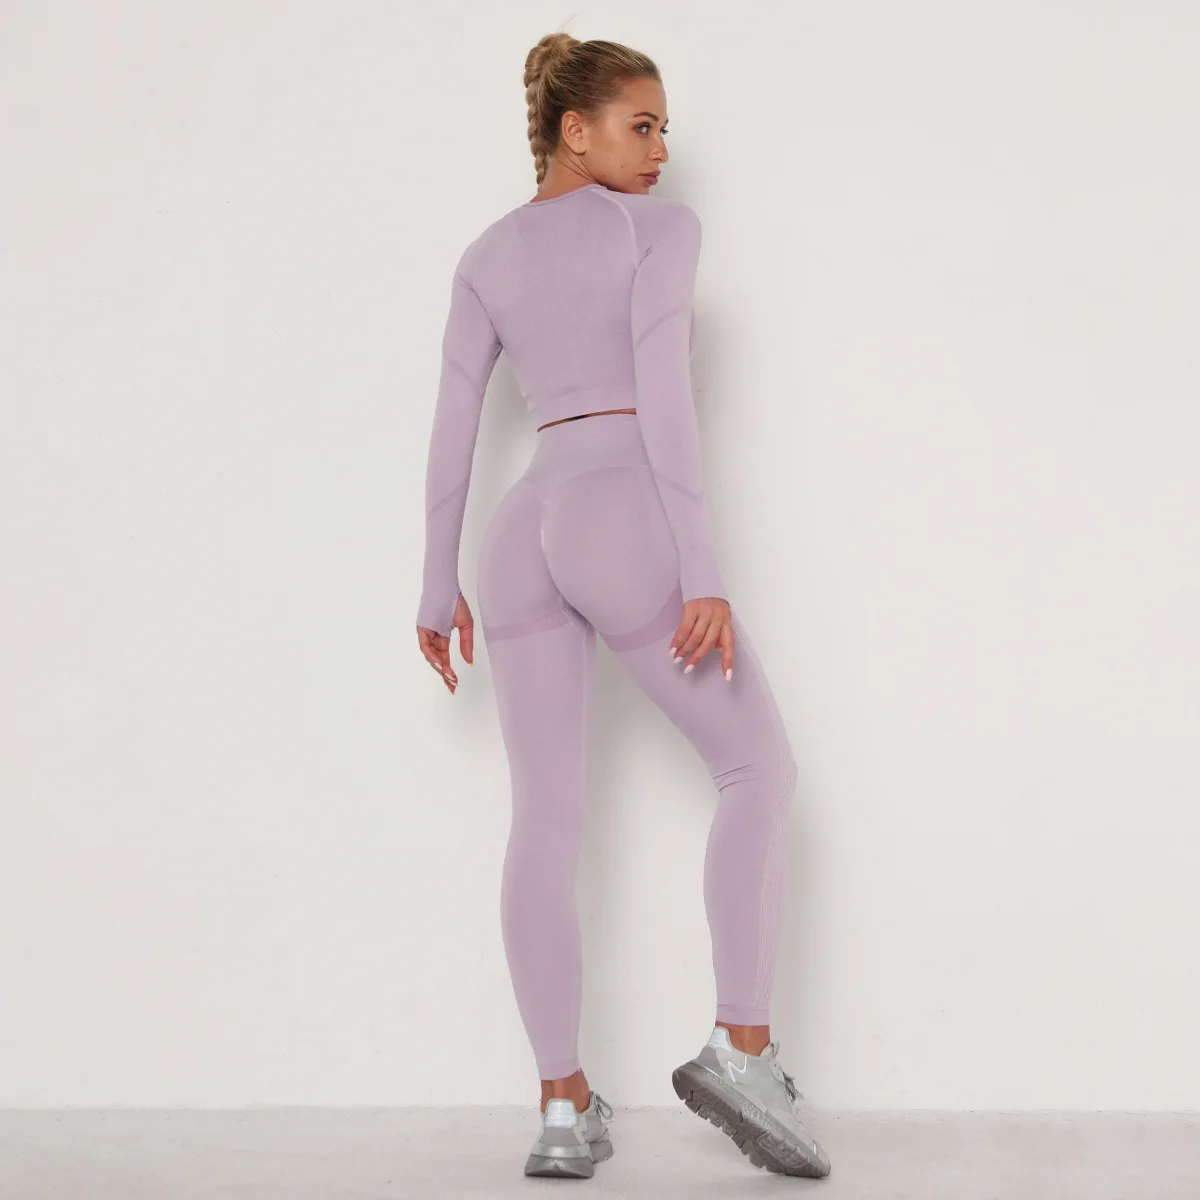 Seamless Yoga Suit High Waist Fitness Pants Women Tight Long Sleeve Shirts High Impact Sports Gym Workout Running Set